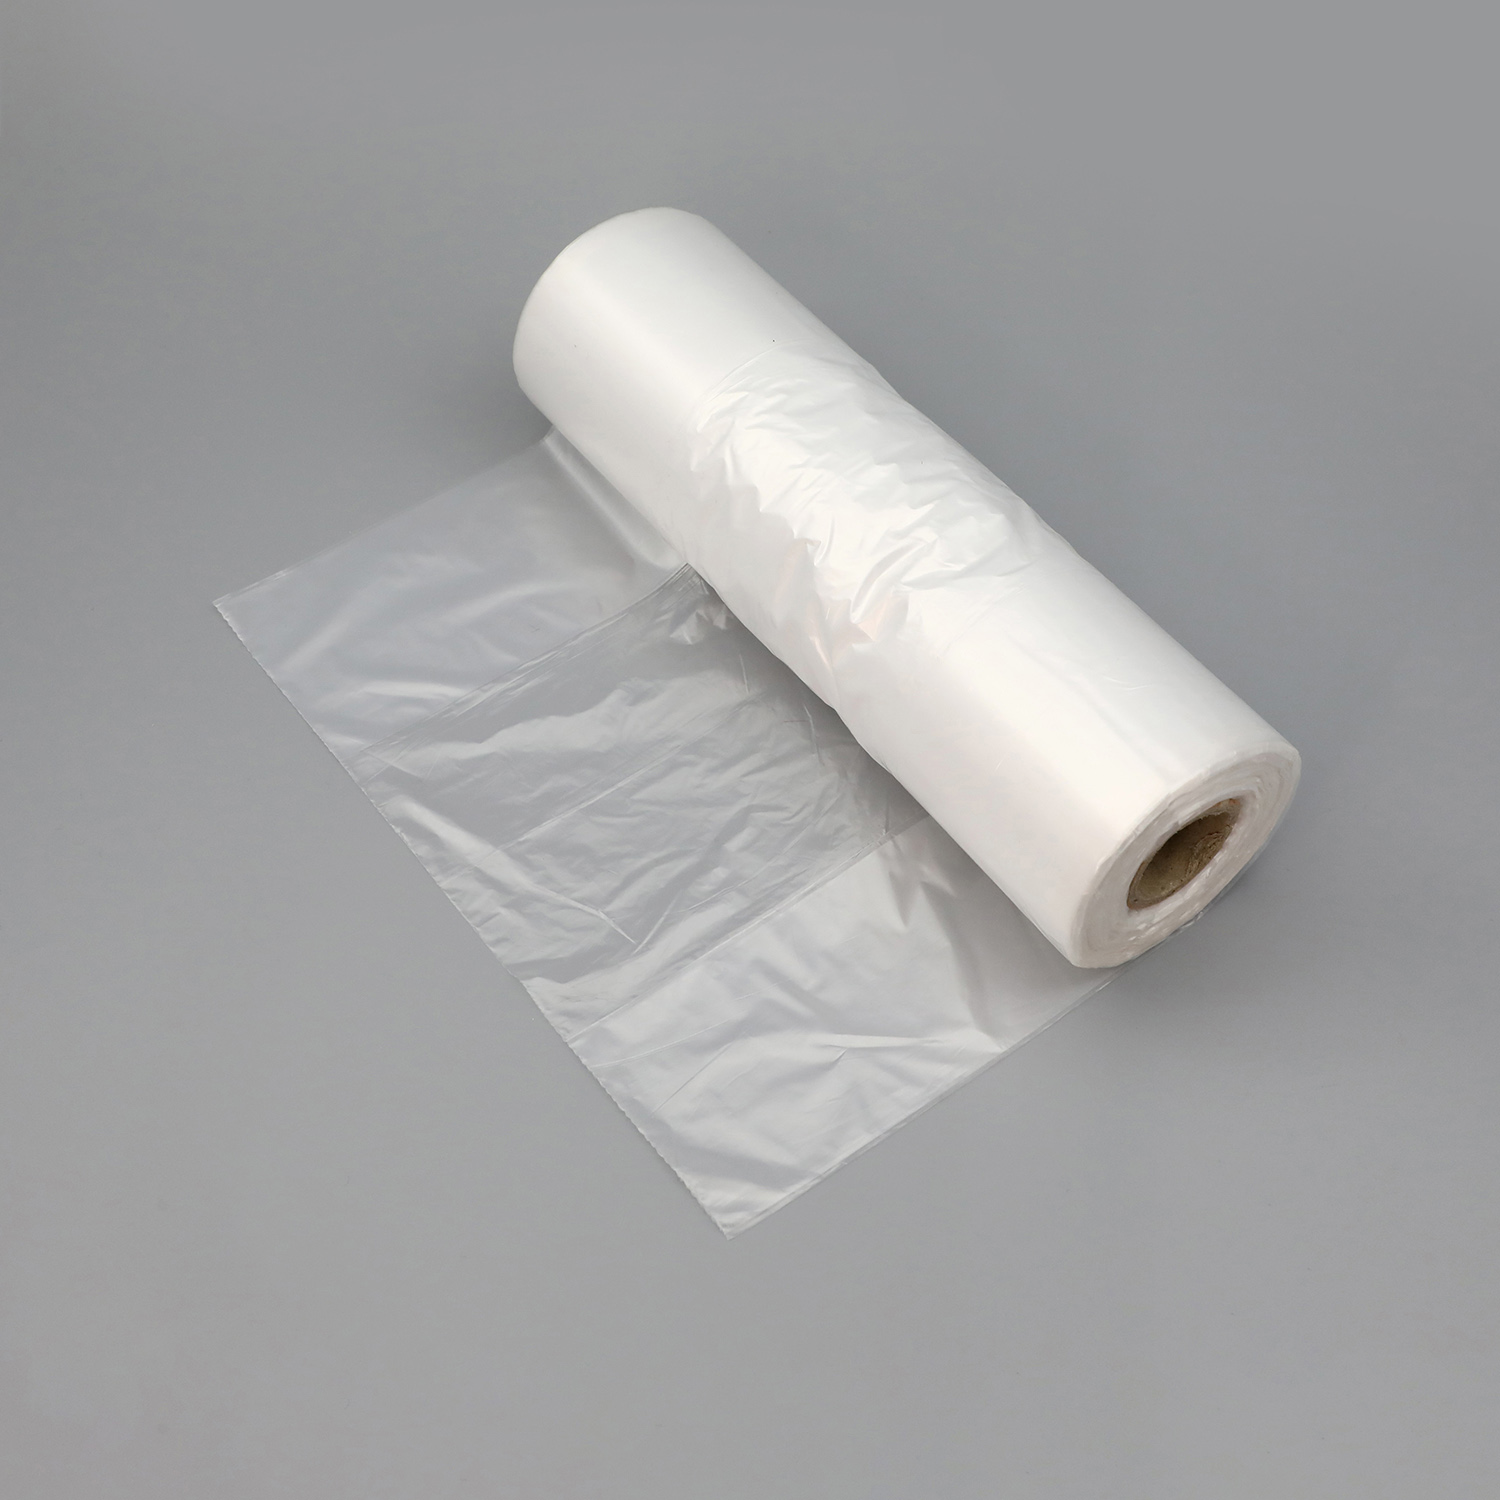 Wholesale Plastic Produce roll bag for Supermarket